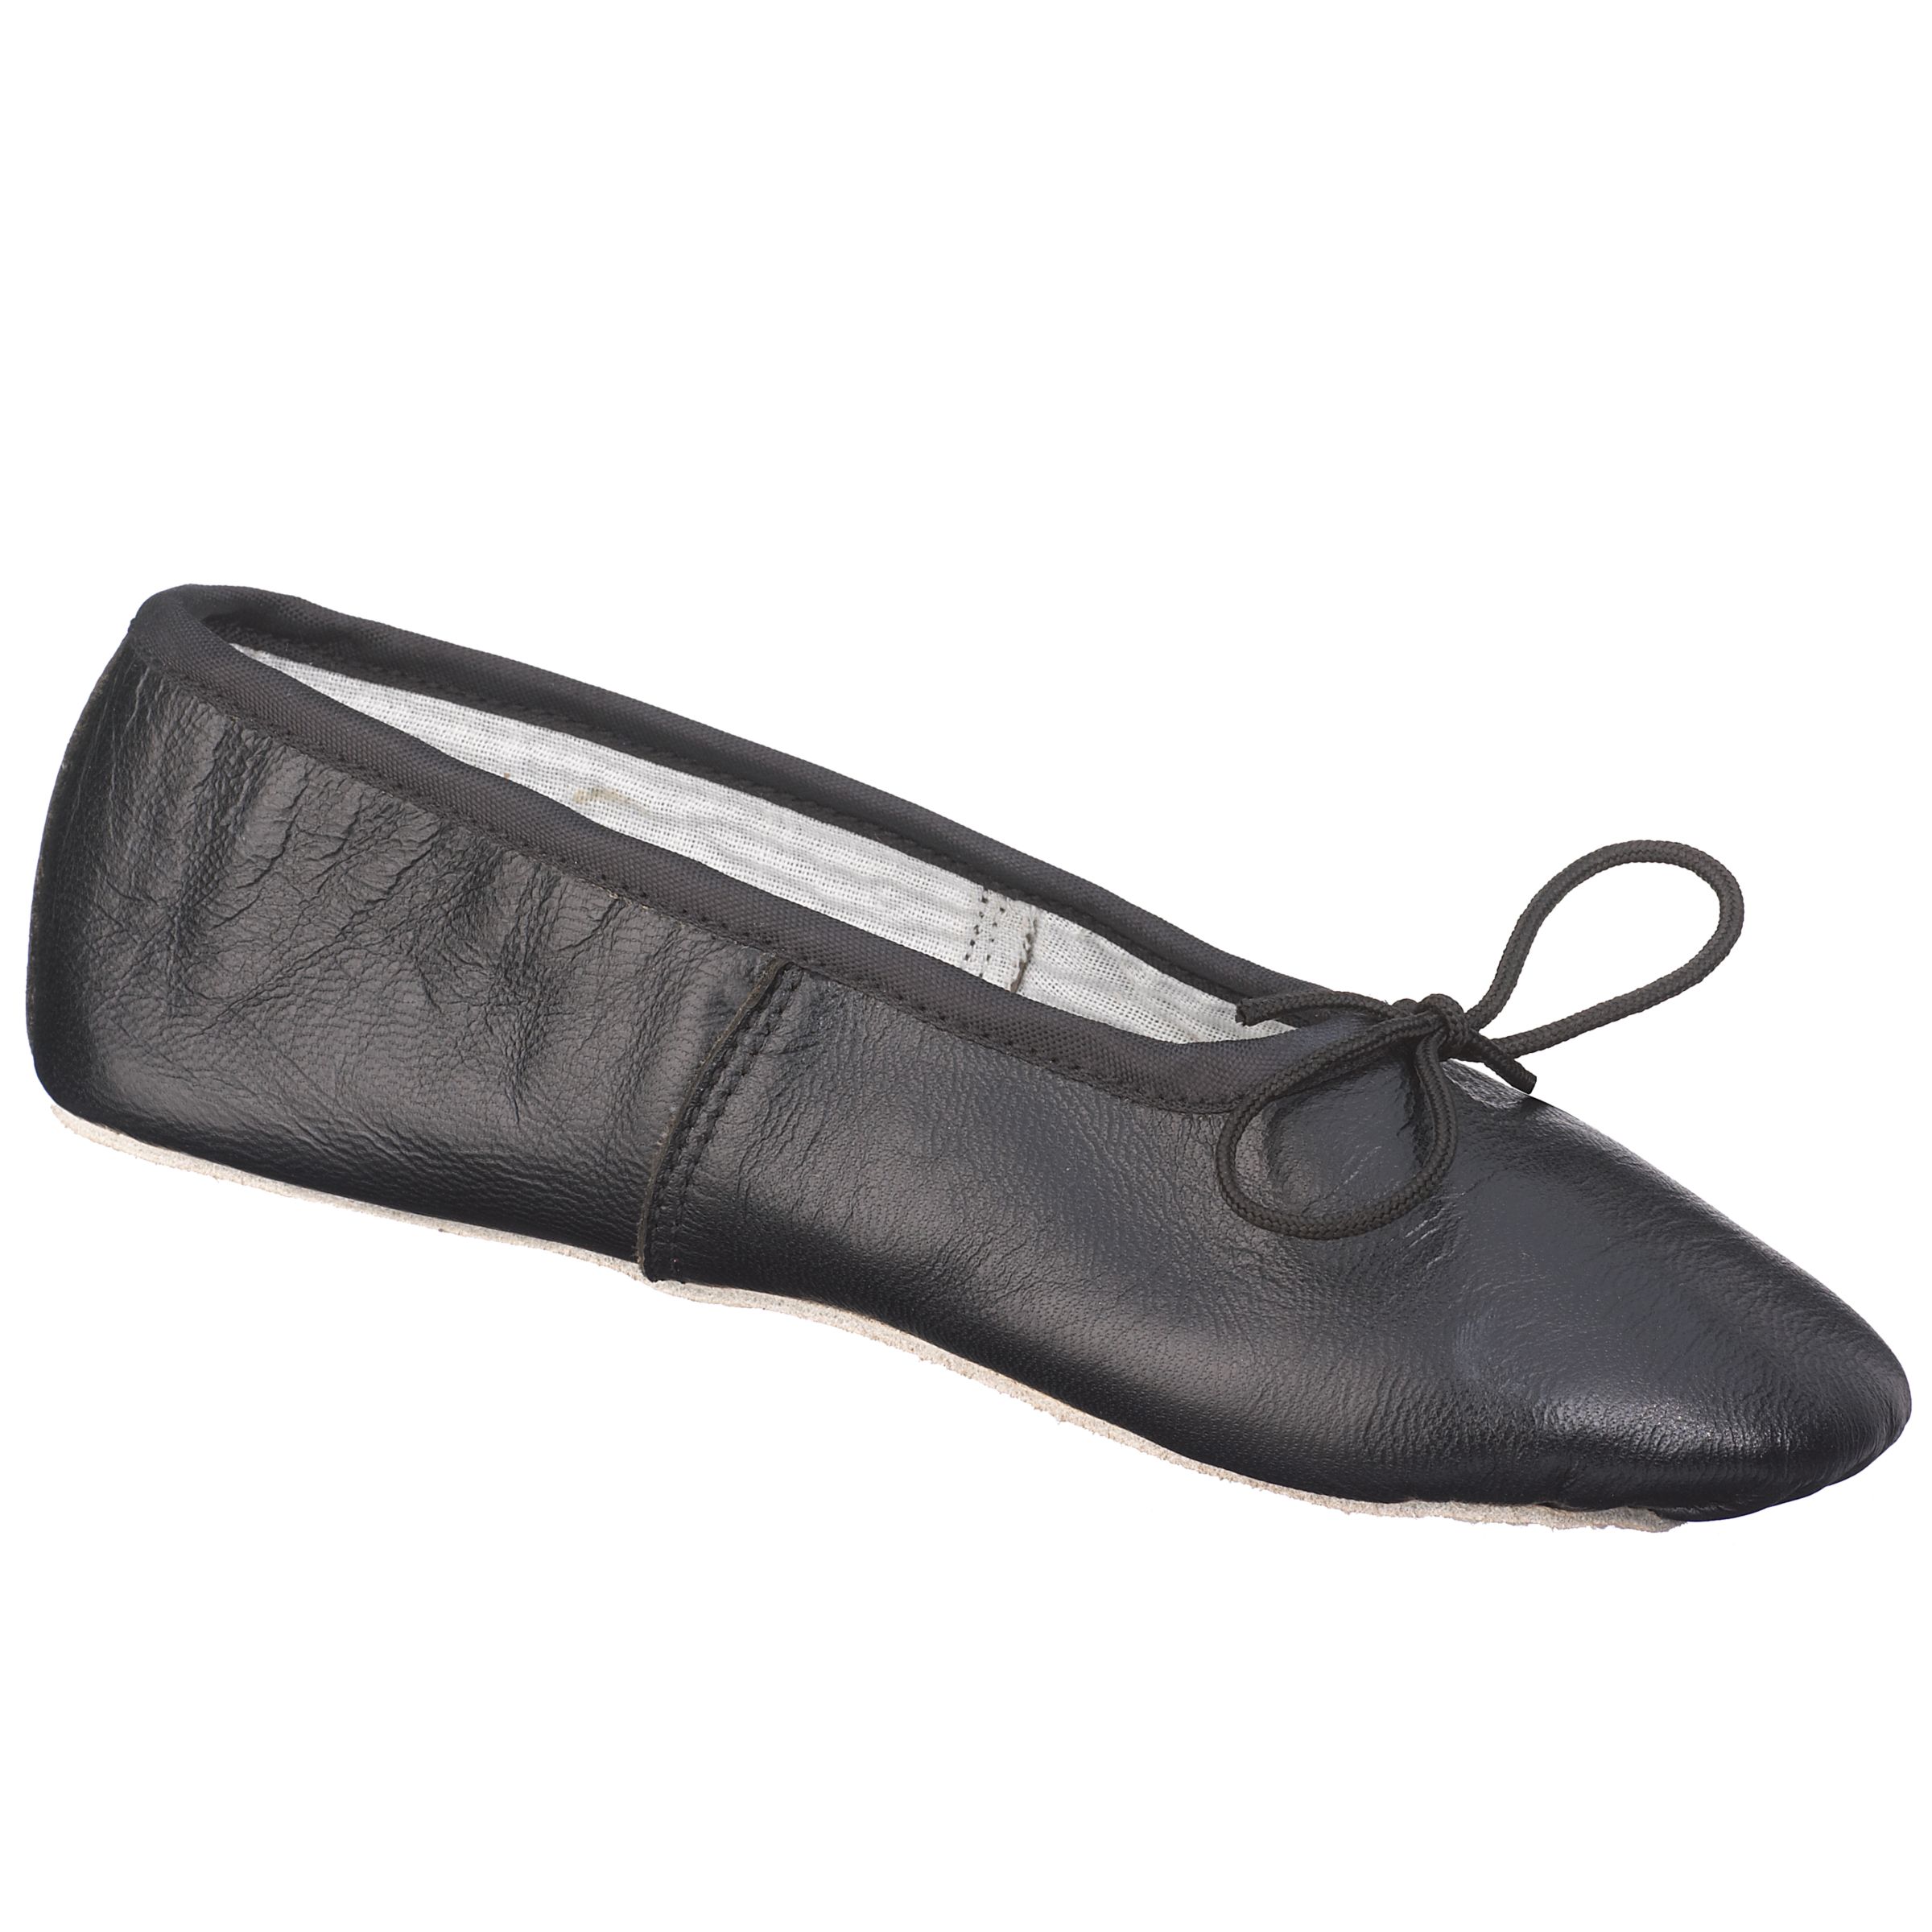 Leather Ballet Shoes, Black 10021